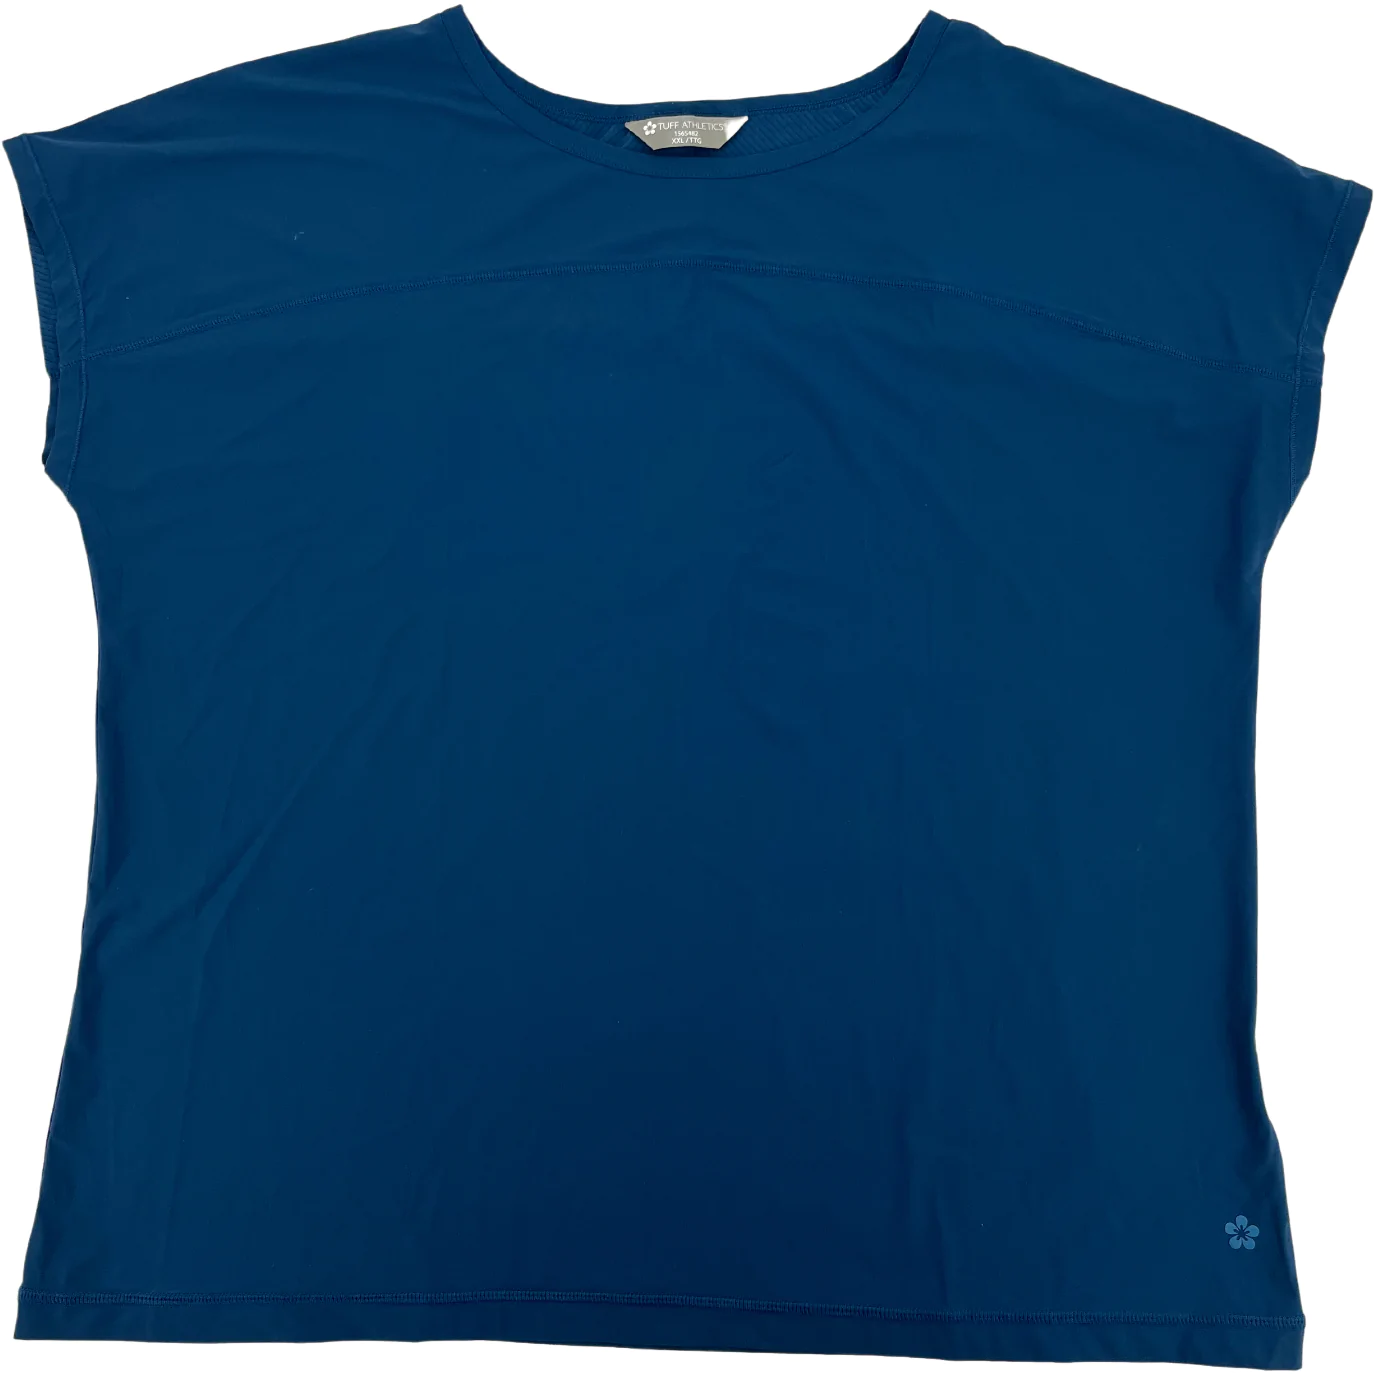 Tuff Athletics Women's Shirt / Women's Top / Blue / Size XXLarge